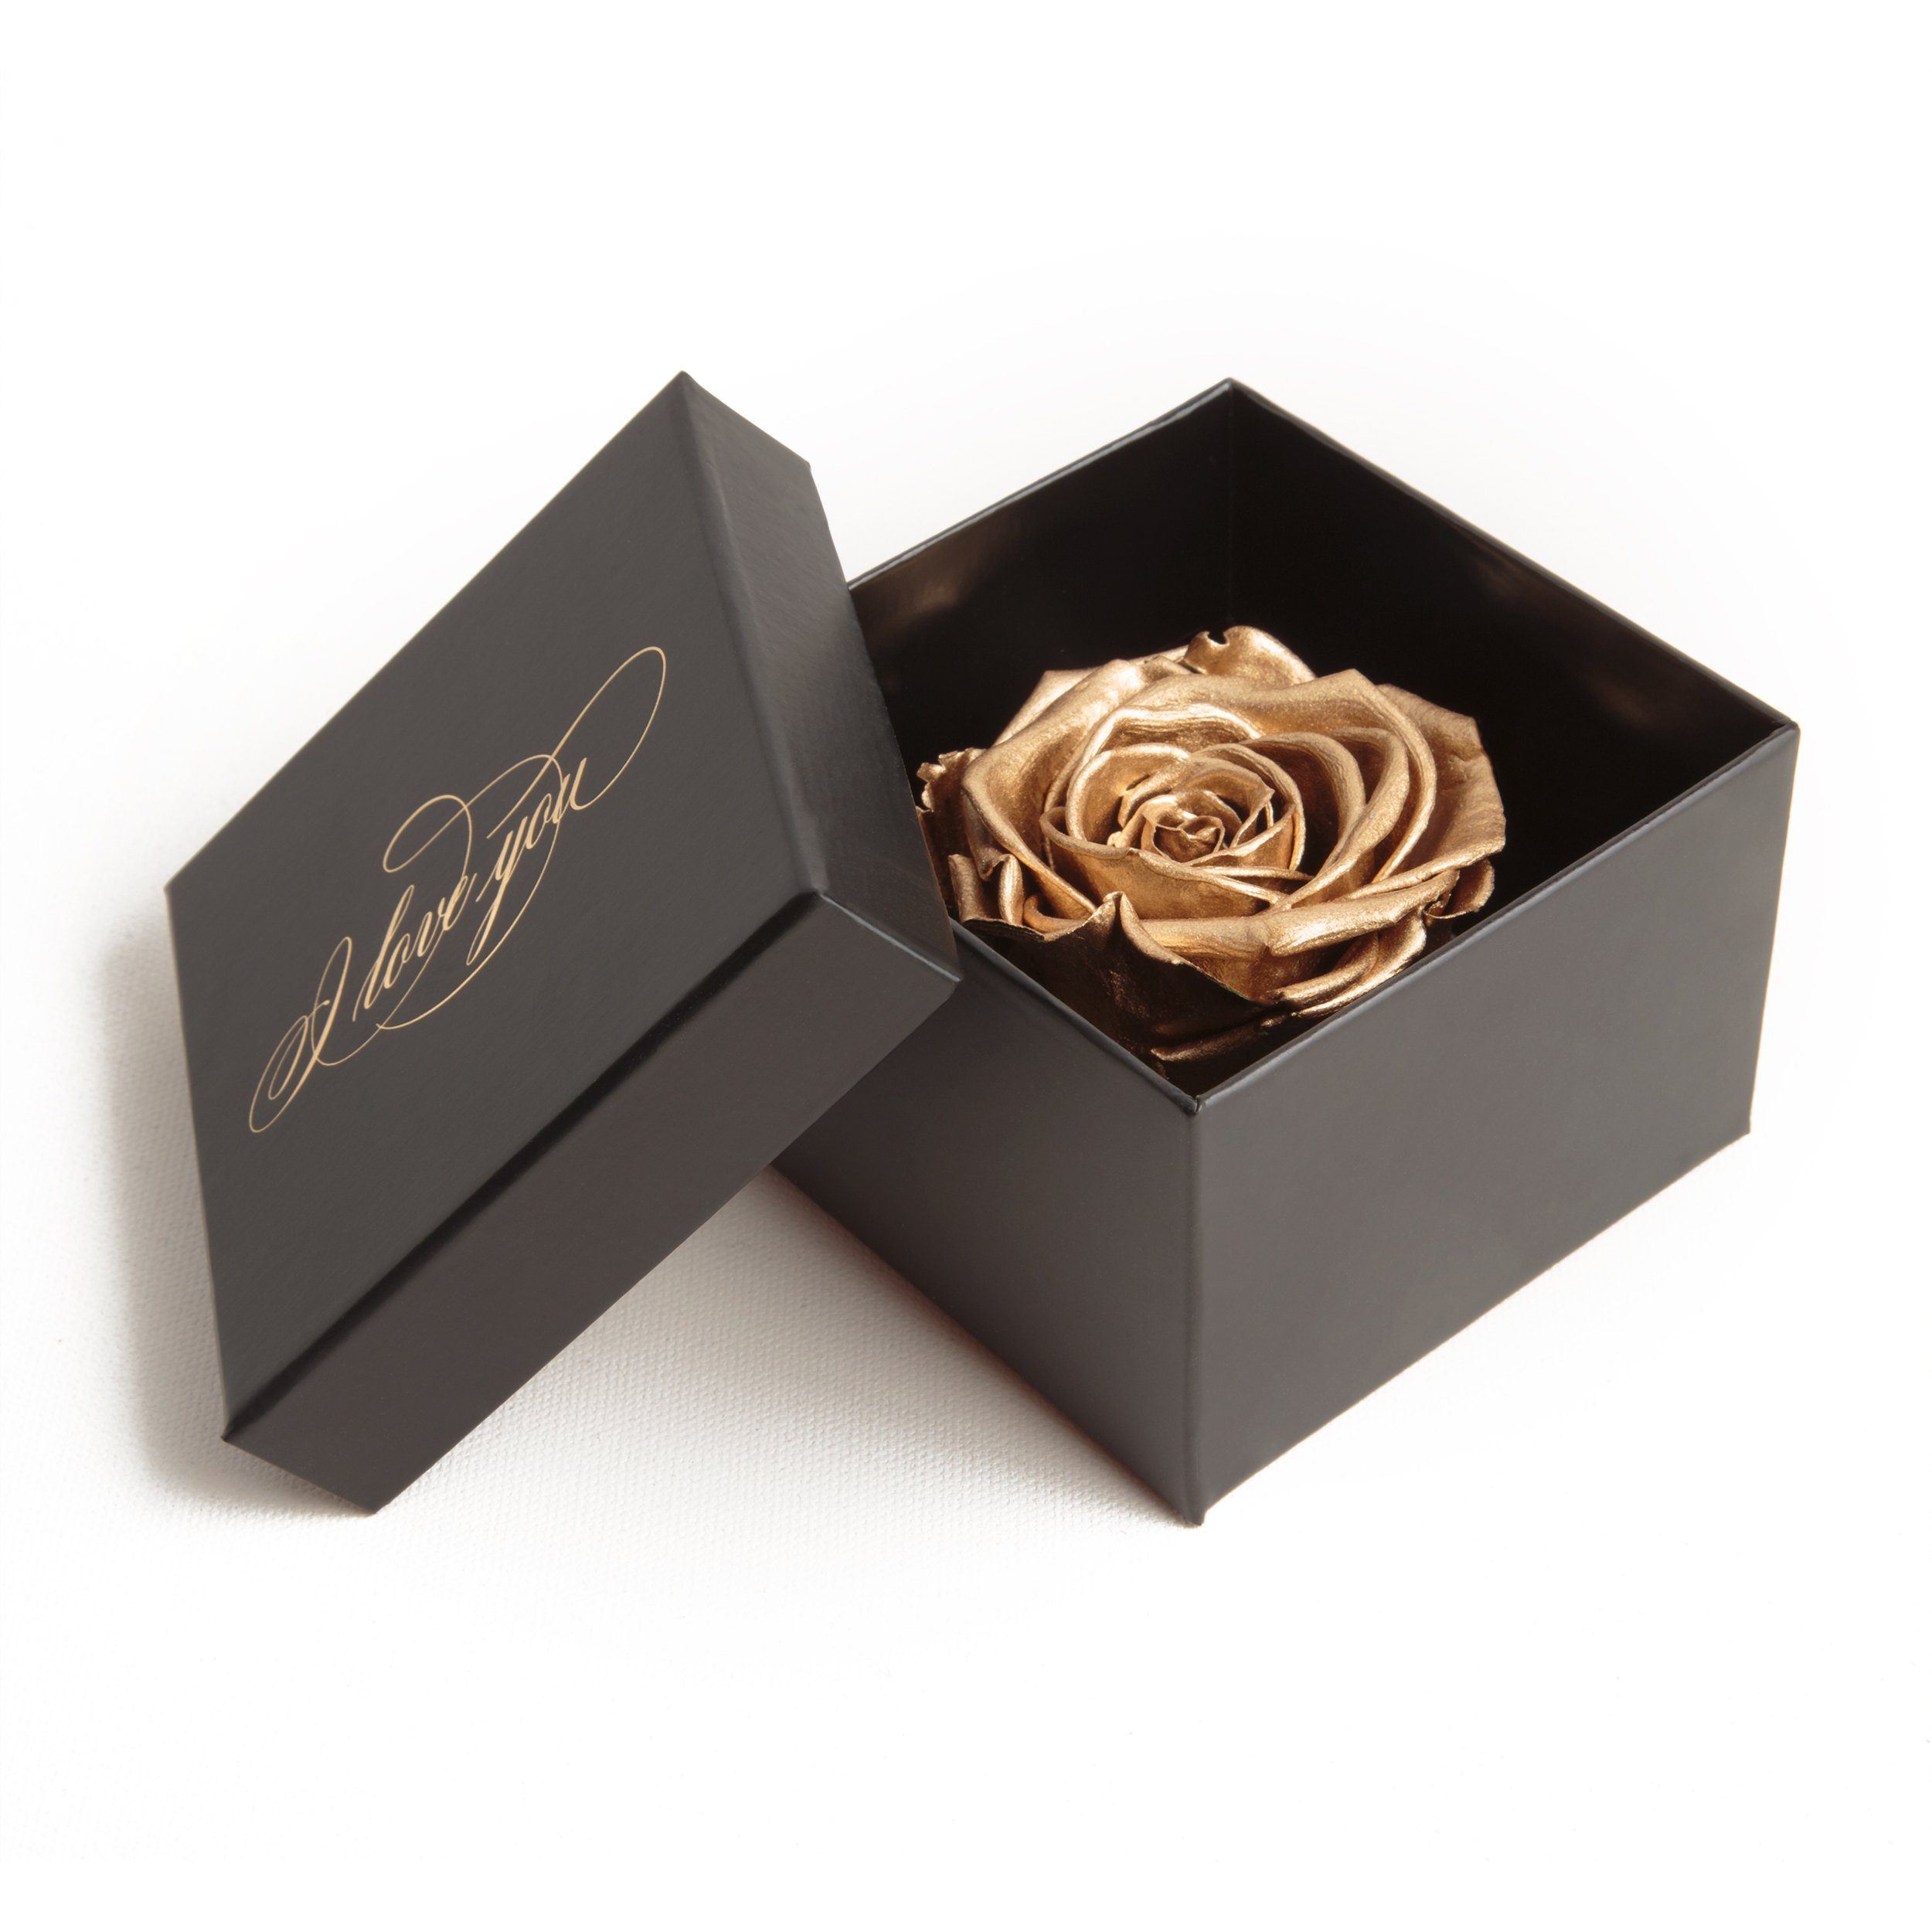 Echte Rose You Gold Liebesbeweis konserviert Idee Rose, Box 6 cm, SCHULZ ROSEMARIE Infinity Love Kunstblume Geschenk Heidelberg, Höhe I Rose